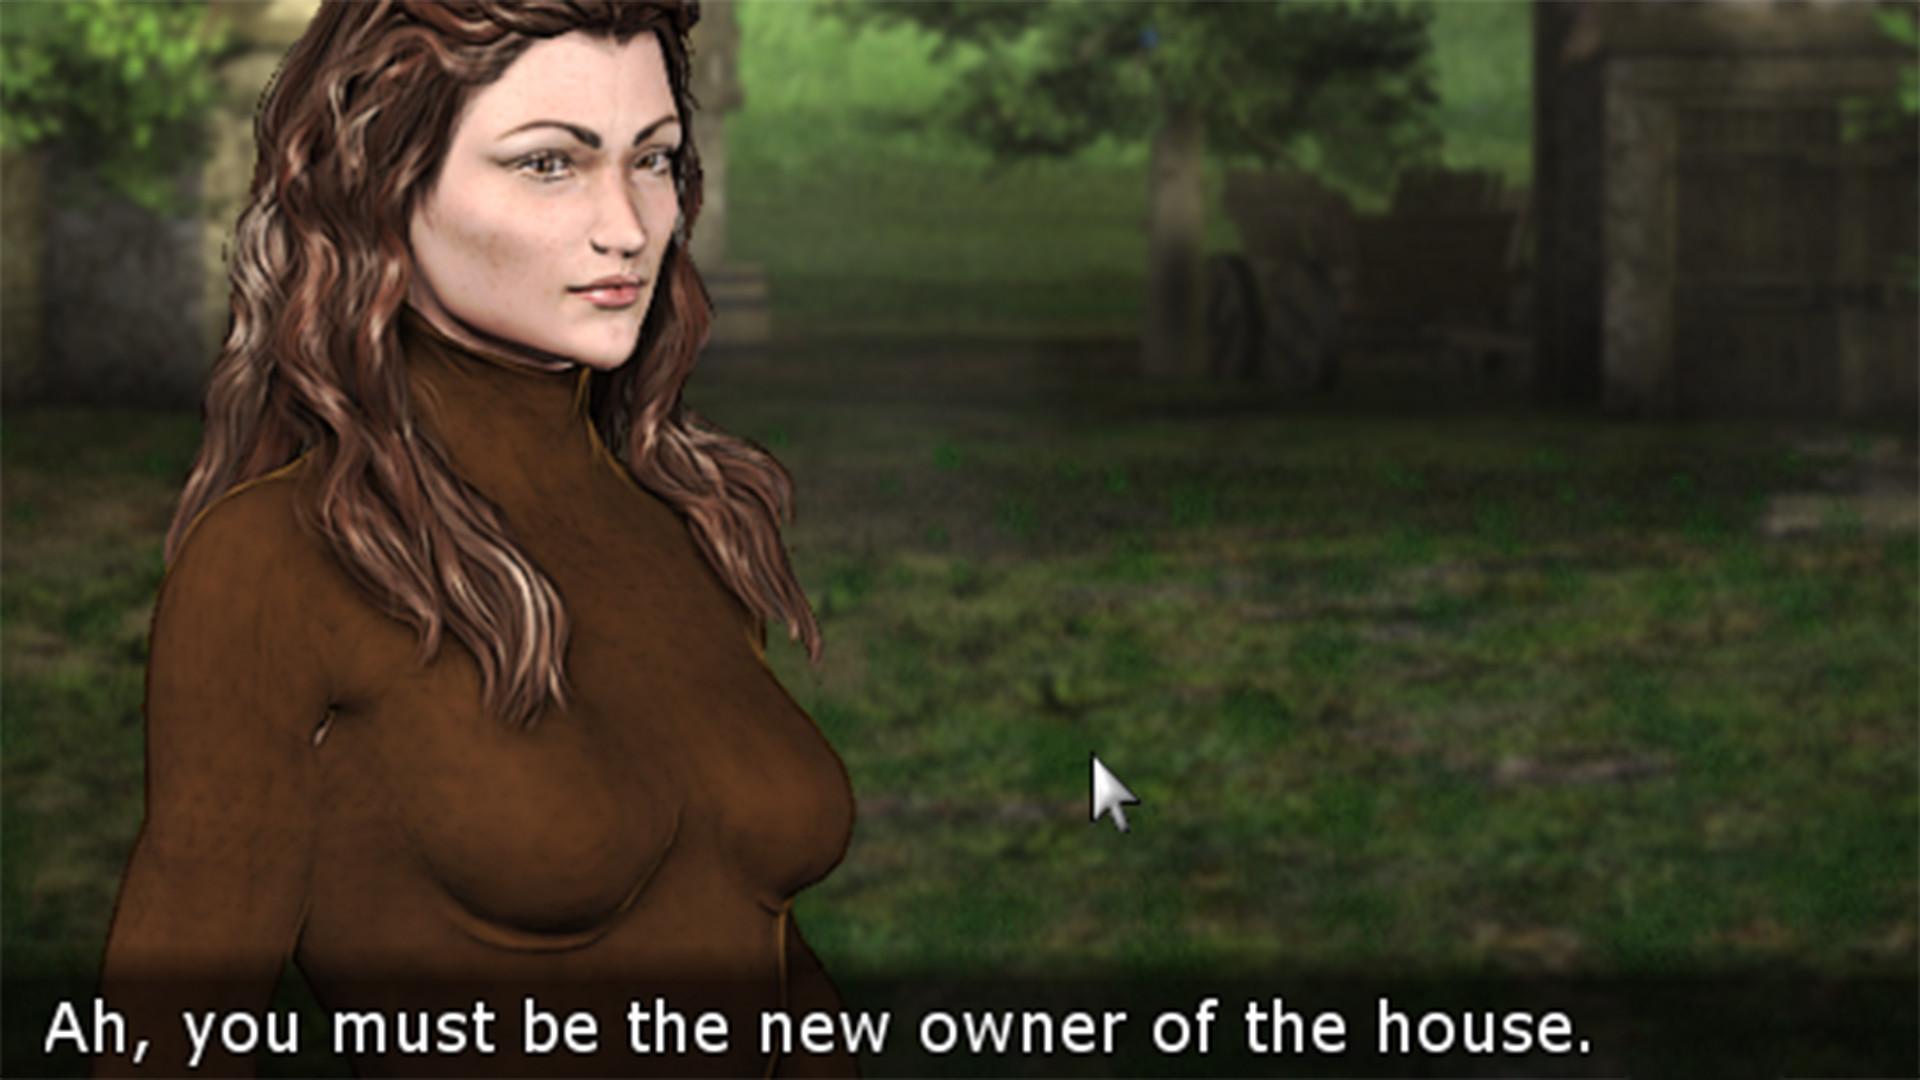 Screenshot №4 from game Gladiator Trainer